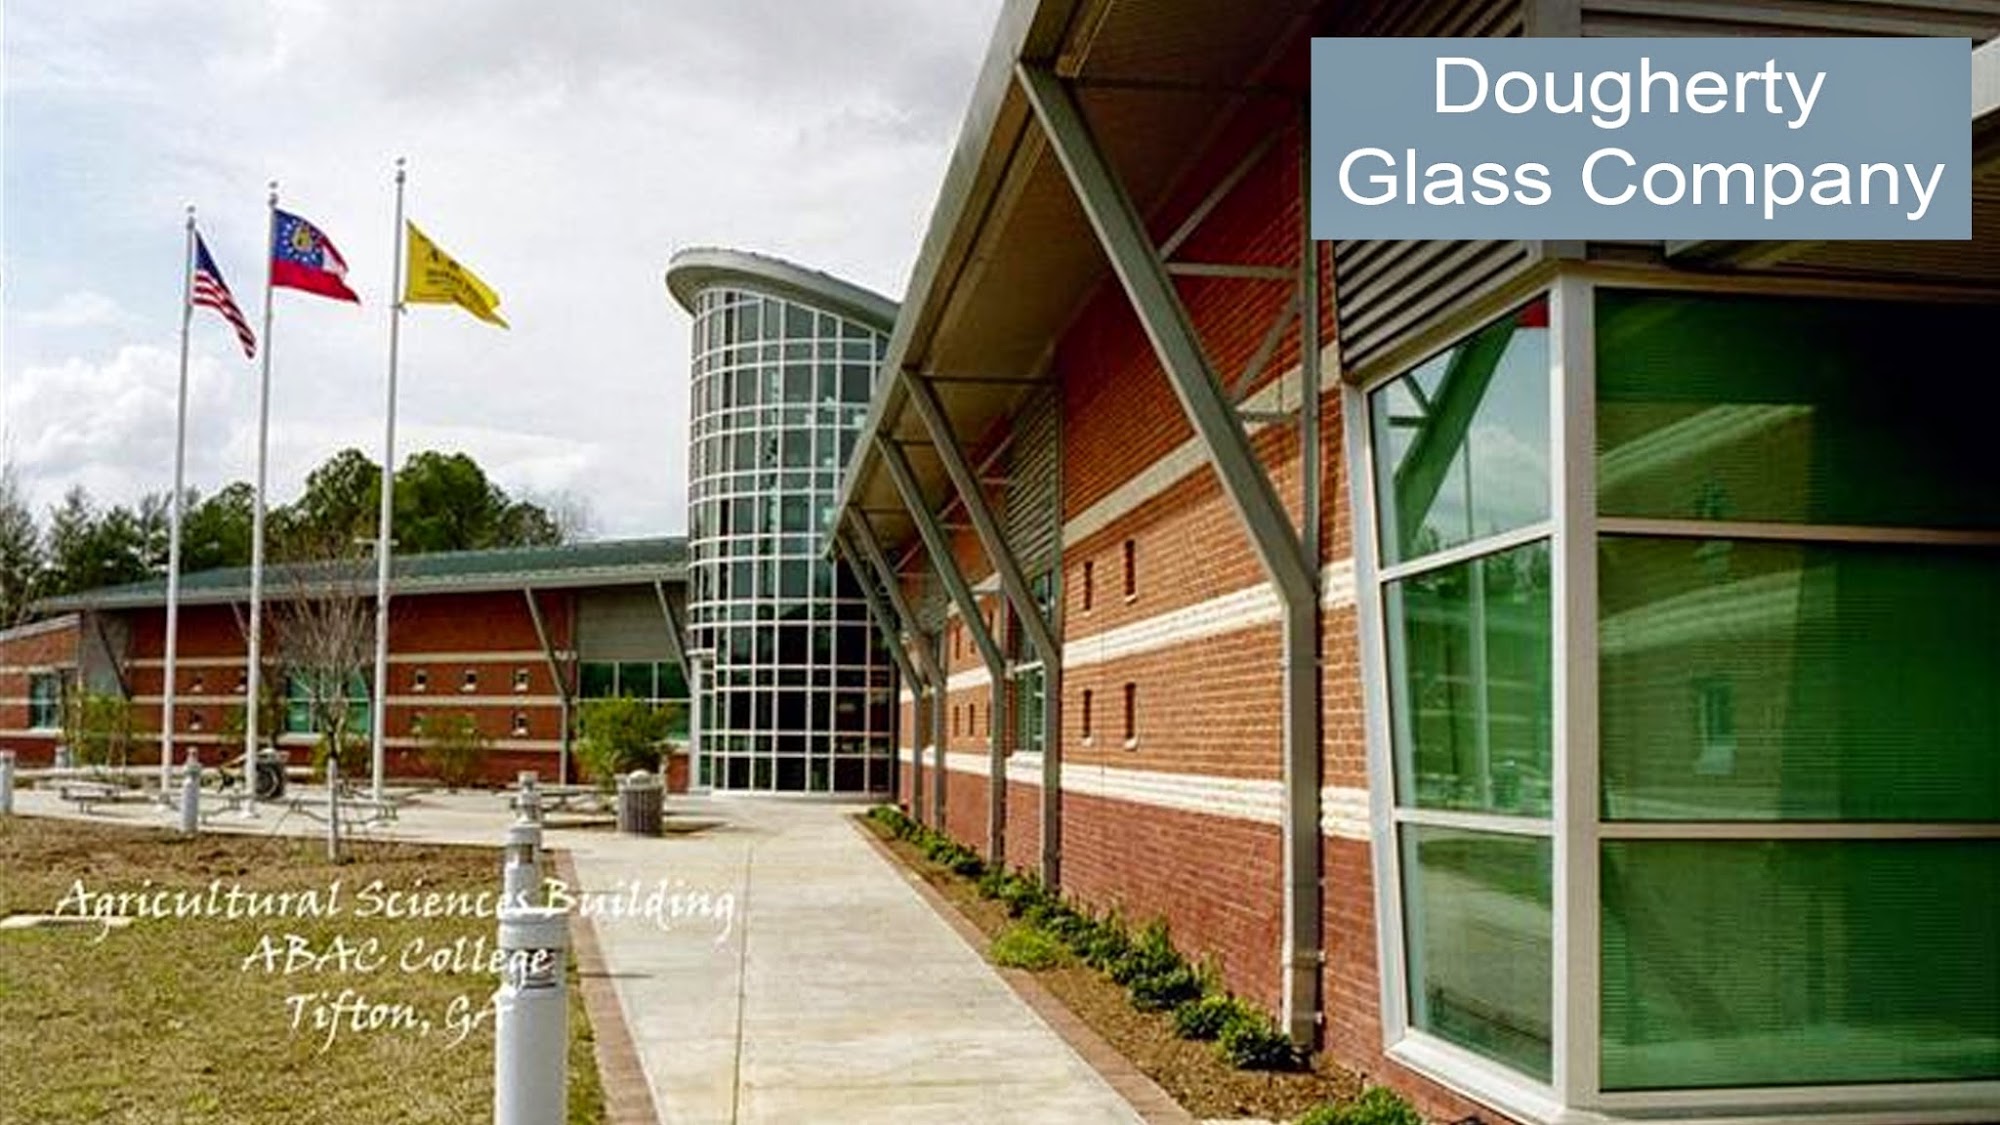 Dougherty Glass